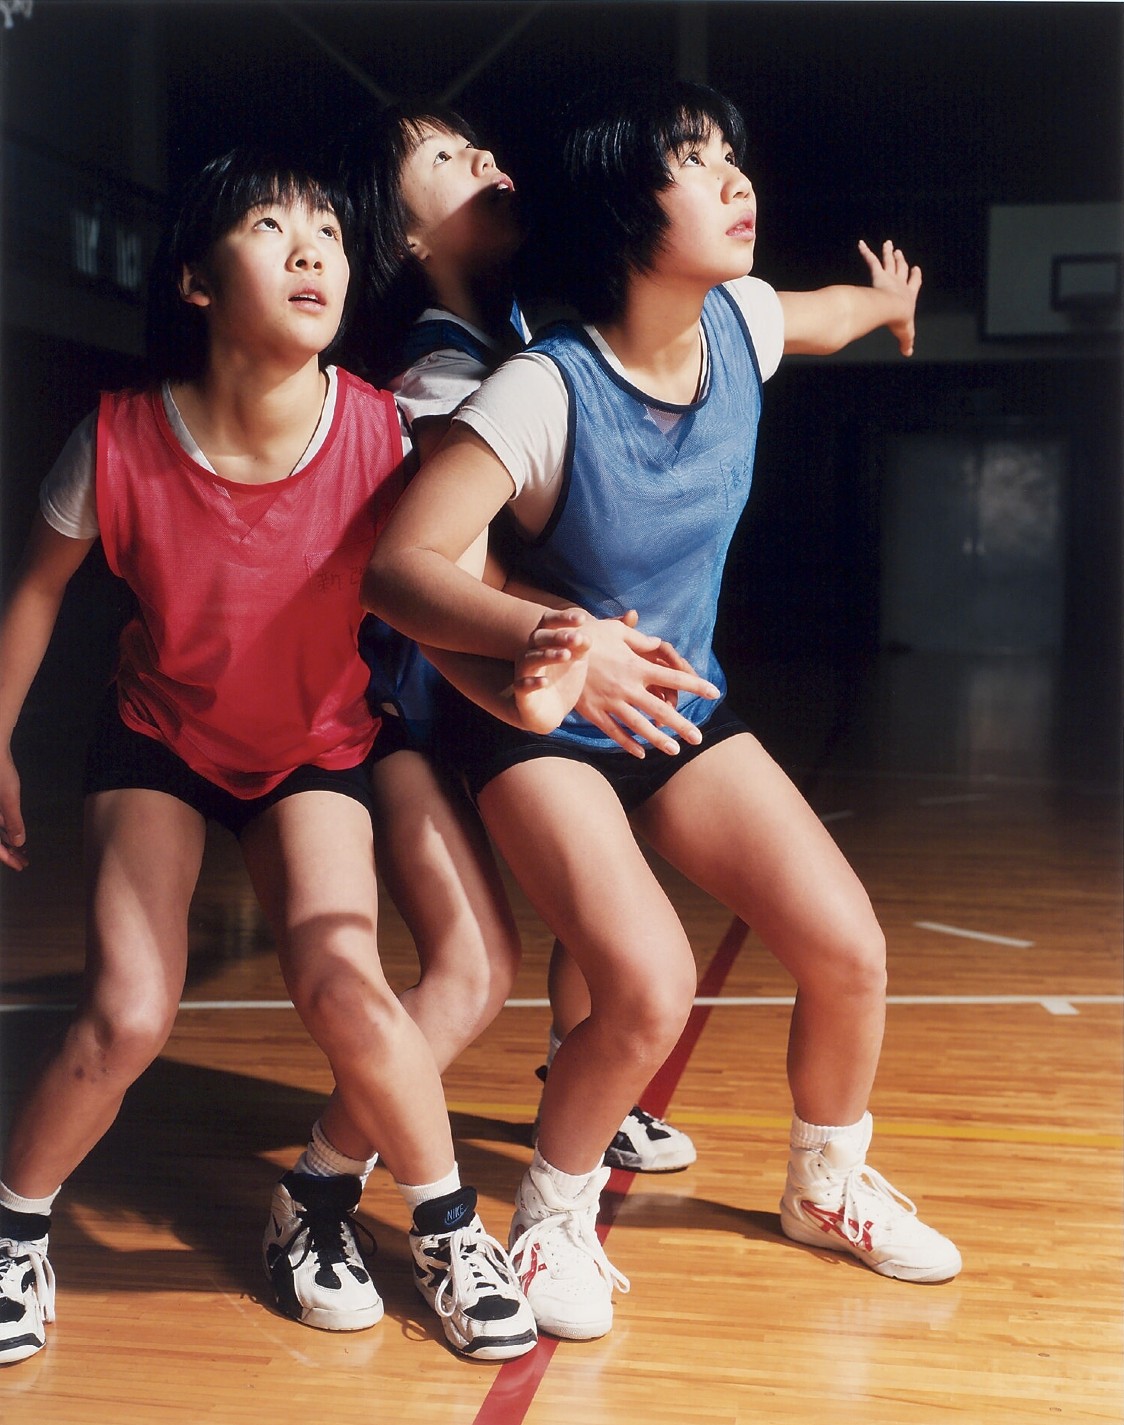 goshogaoka-girls-basketball-team-by-sharon-lockhart-1997-1362242467_org.png